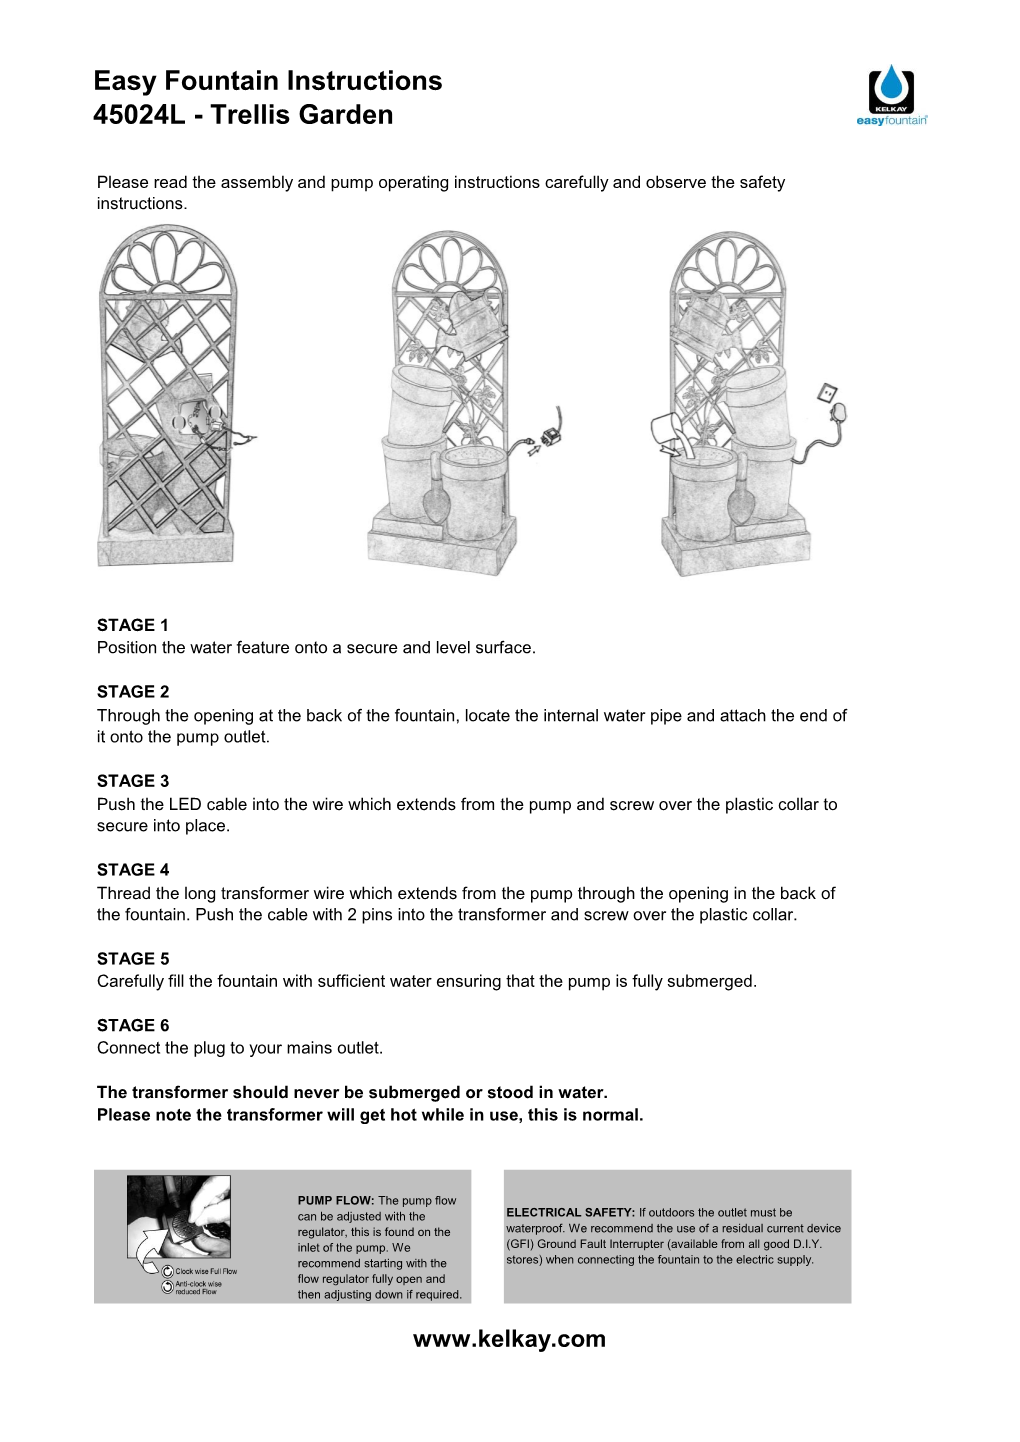 Easy Fountain Instructions 45024L - Trellis Garden